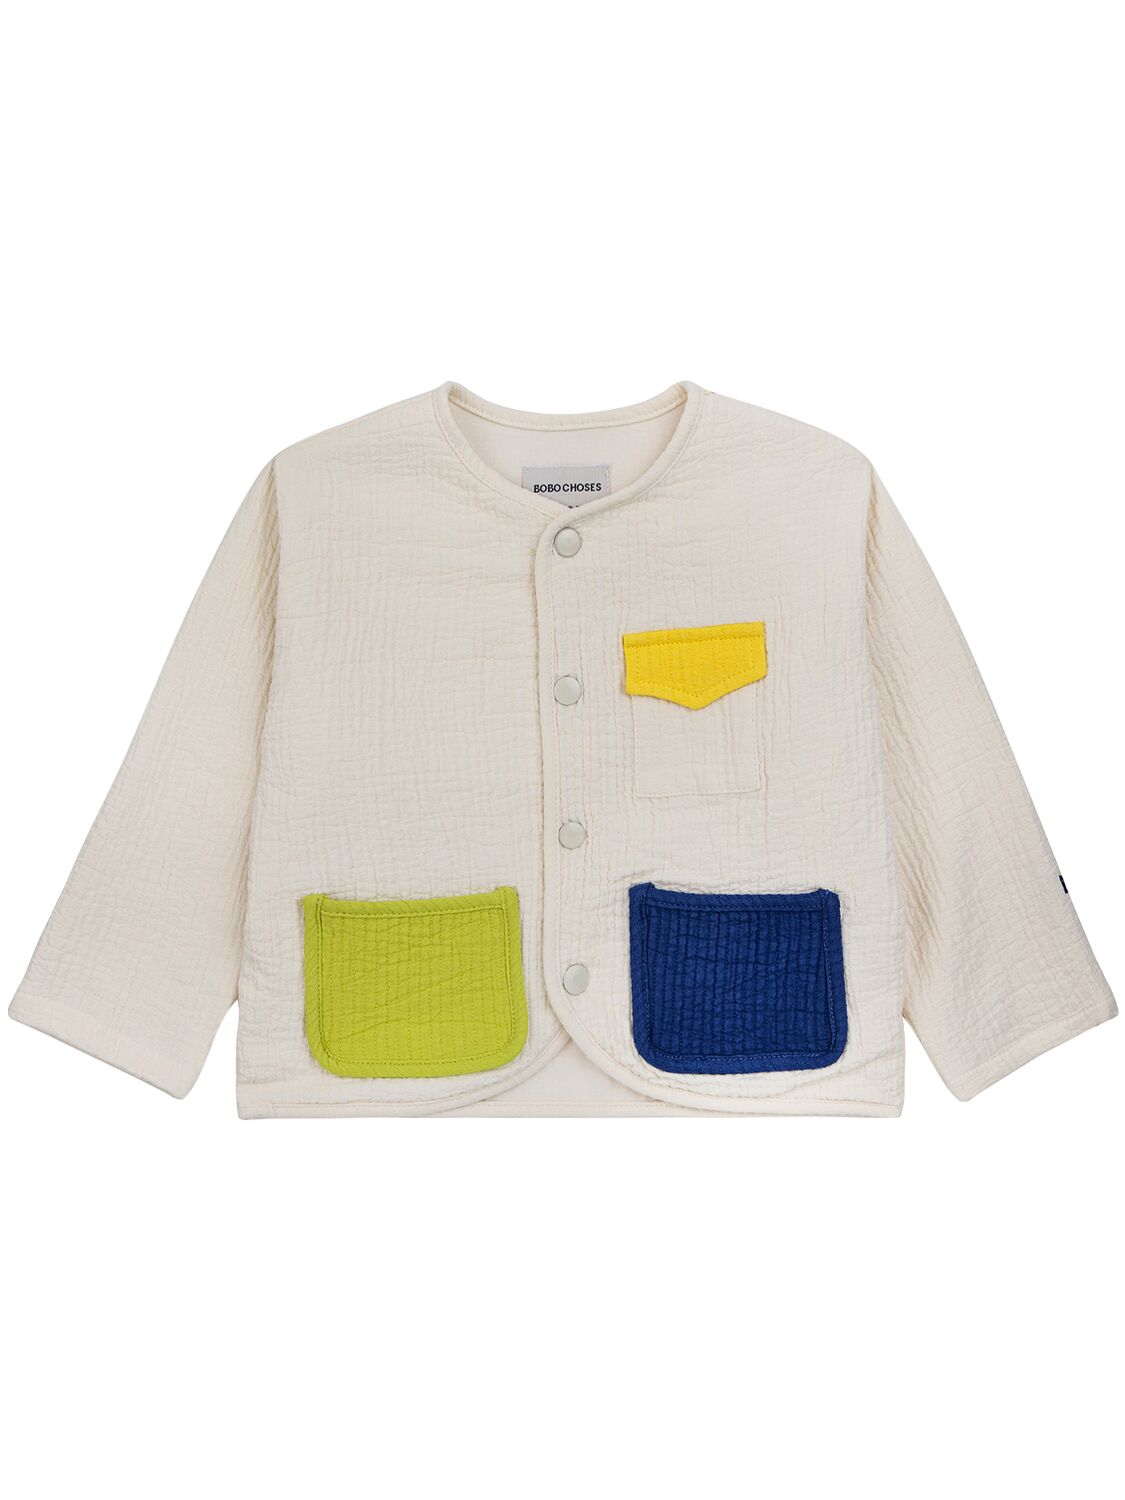 Bobo Choses Babies' Cotton Jacket In White,multi